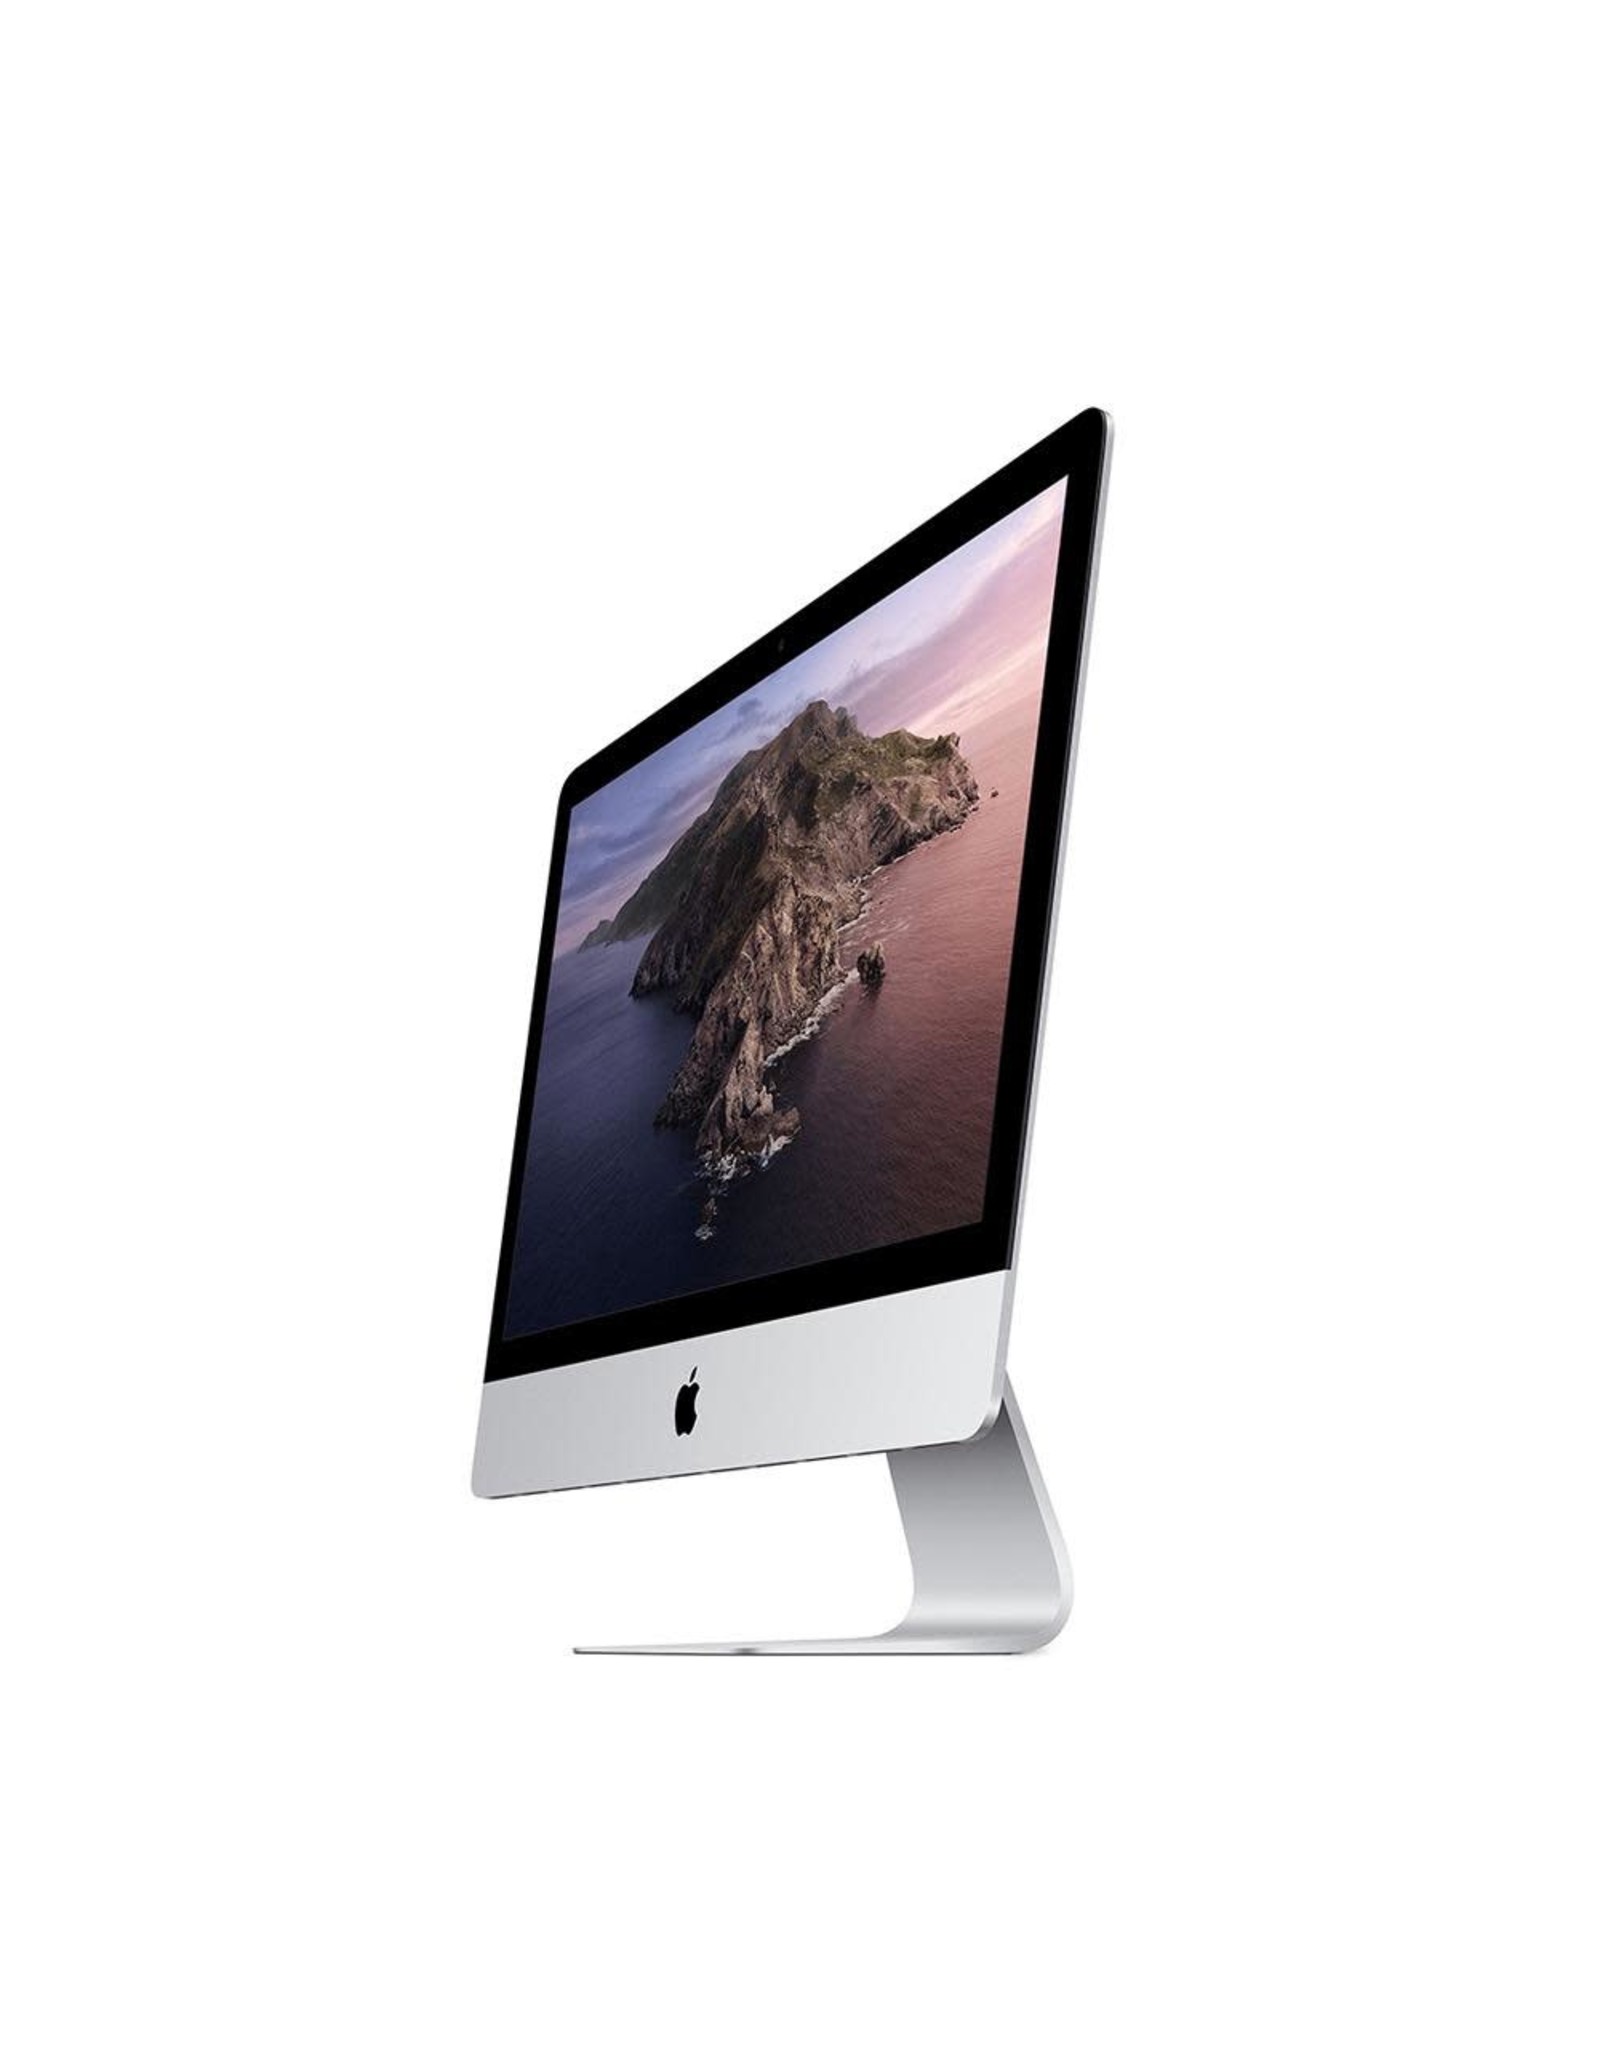 Apple 21.5-inch iMac 2.3GHz dual-core 7th-generation Intel Core i5/8GB/256GB SSD/Iris Plus 640